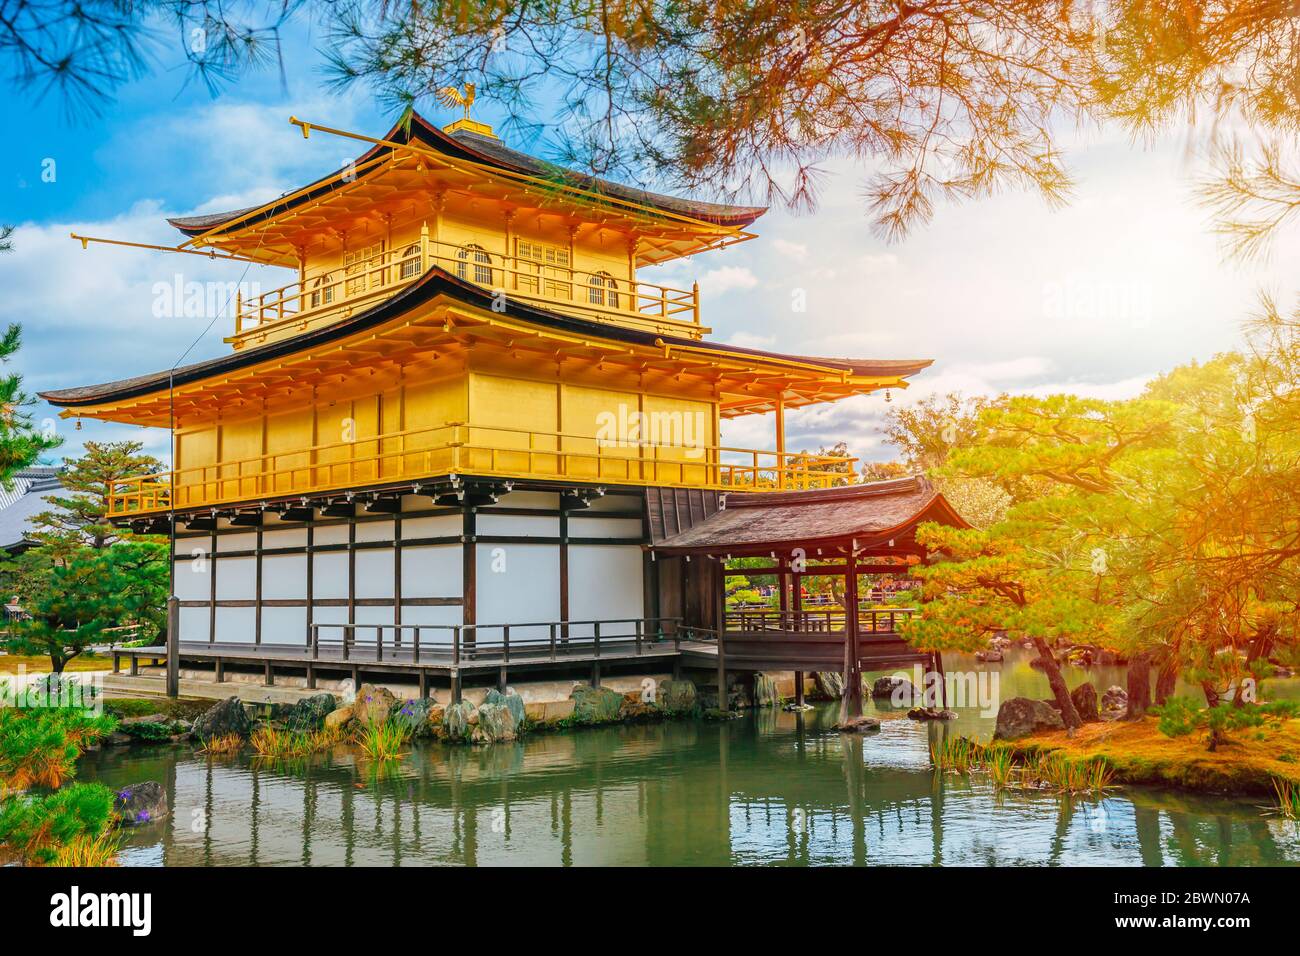 Golden temple in Japan, Kinkaku-ji Gold Pavilion  Buddhist Zen Temple Travel landmark at Kyoto, Japan. Stock Photo